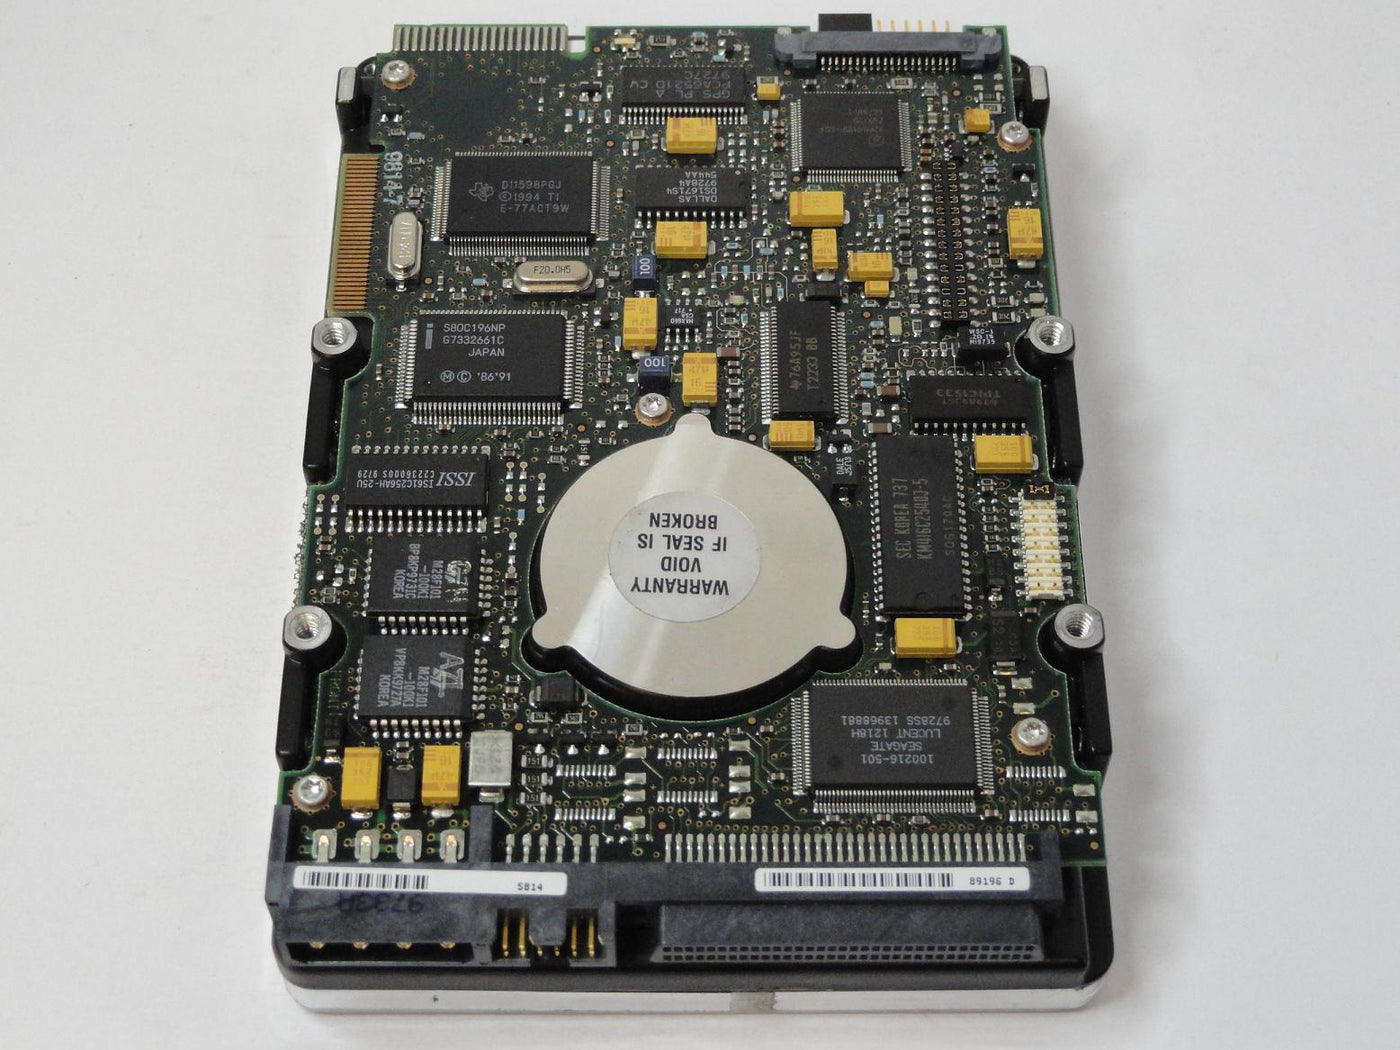 PR13040_9J6002-037_Seagate Compaq 4.5GB SCSI 68 Pin 7200rpm 3.5in HDD - Image3